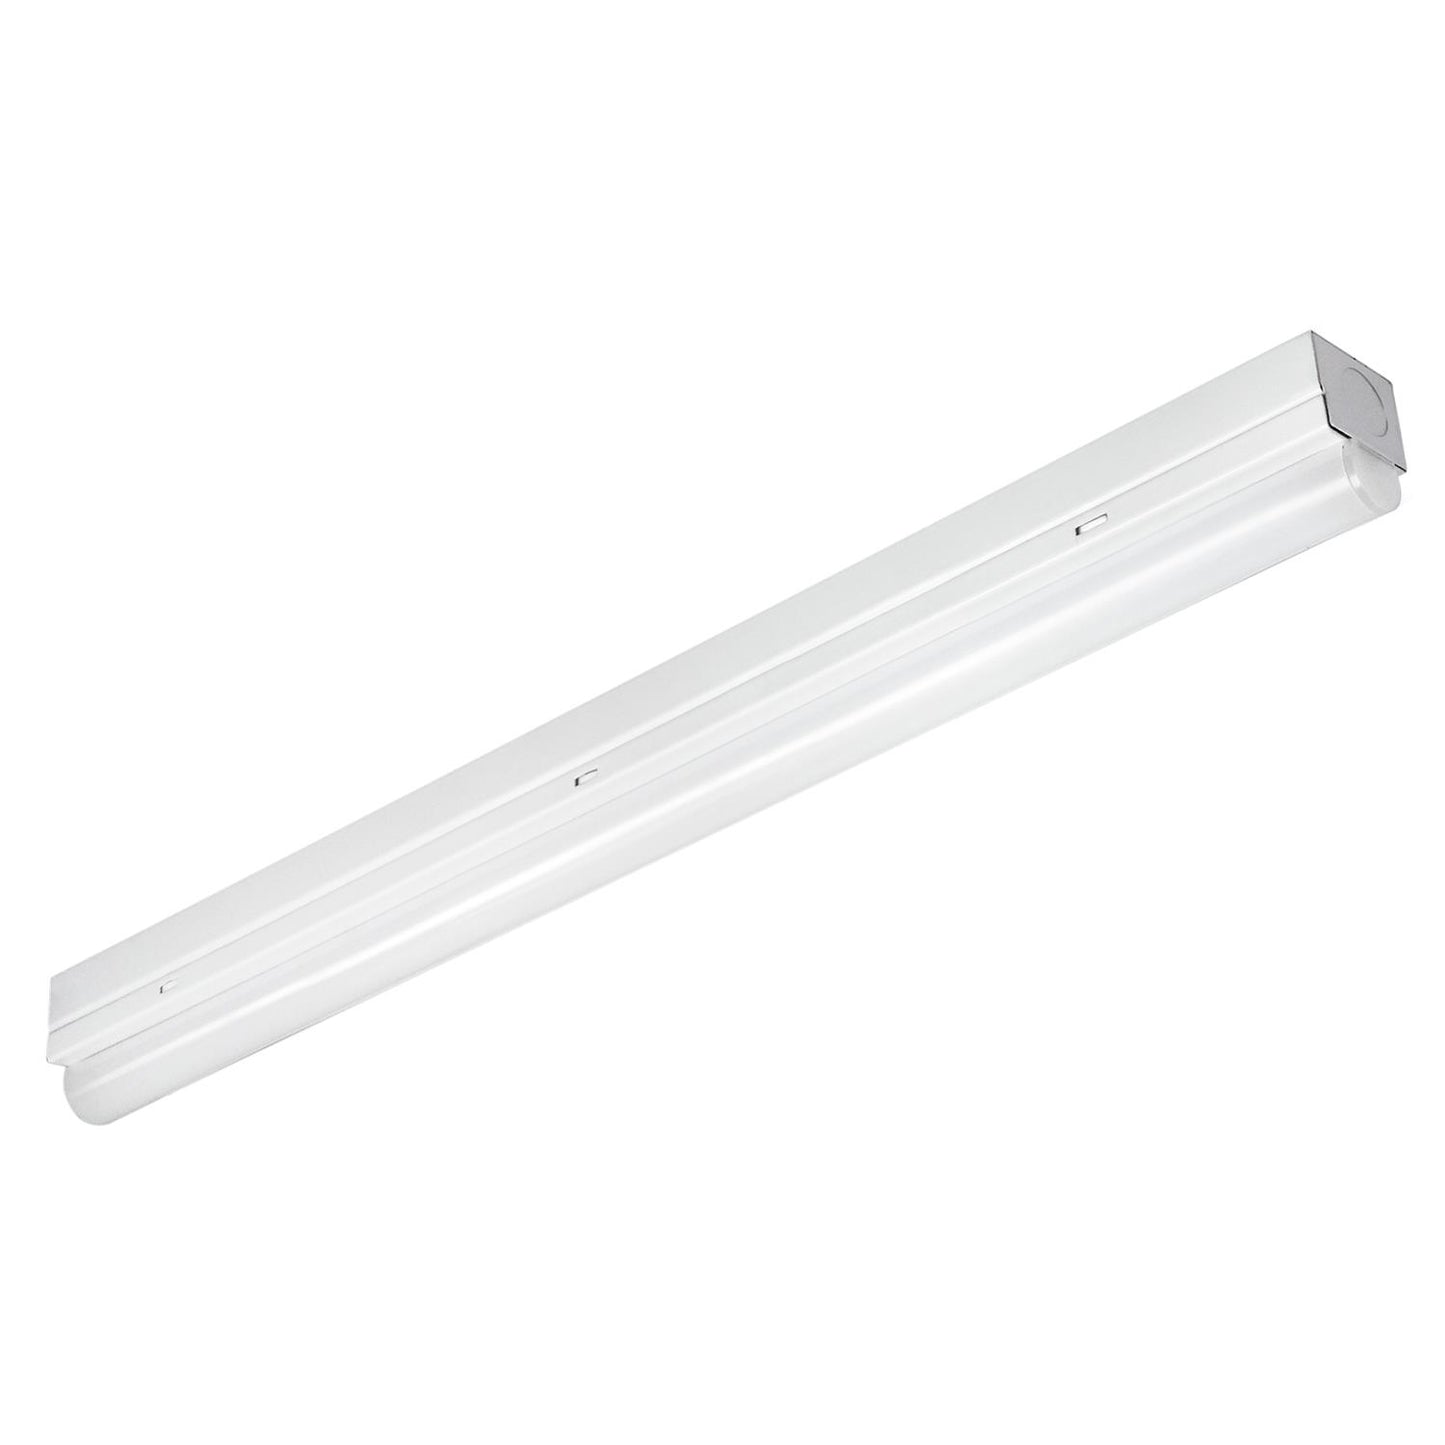 Sunlite LED 24" Linear Single Strip Fixture, 11 Watts, 5000K Super White, 1520 Lumen